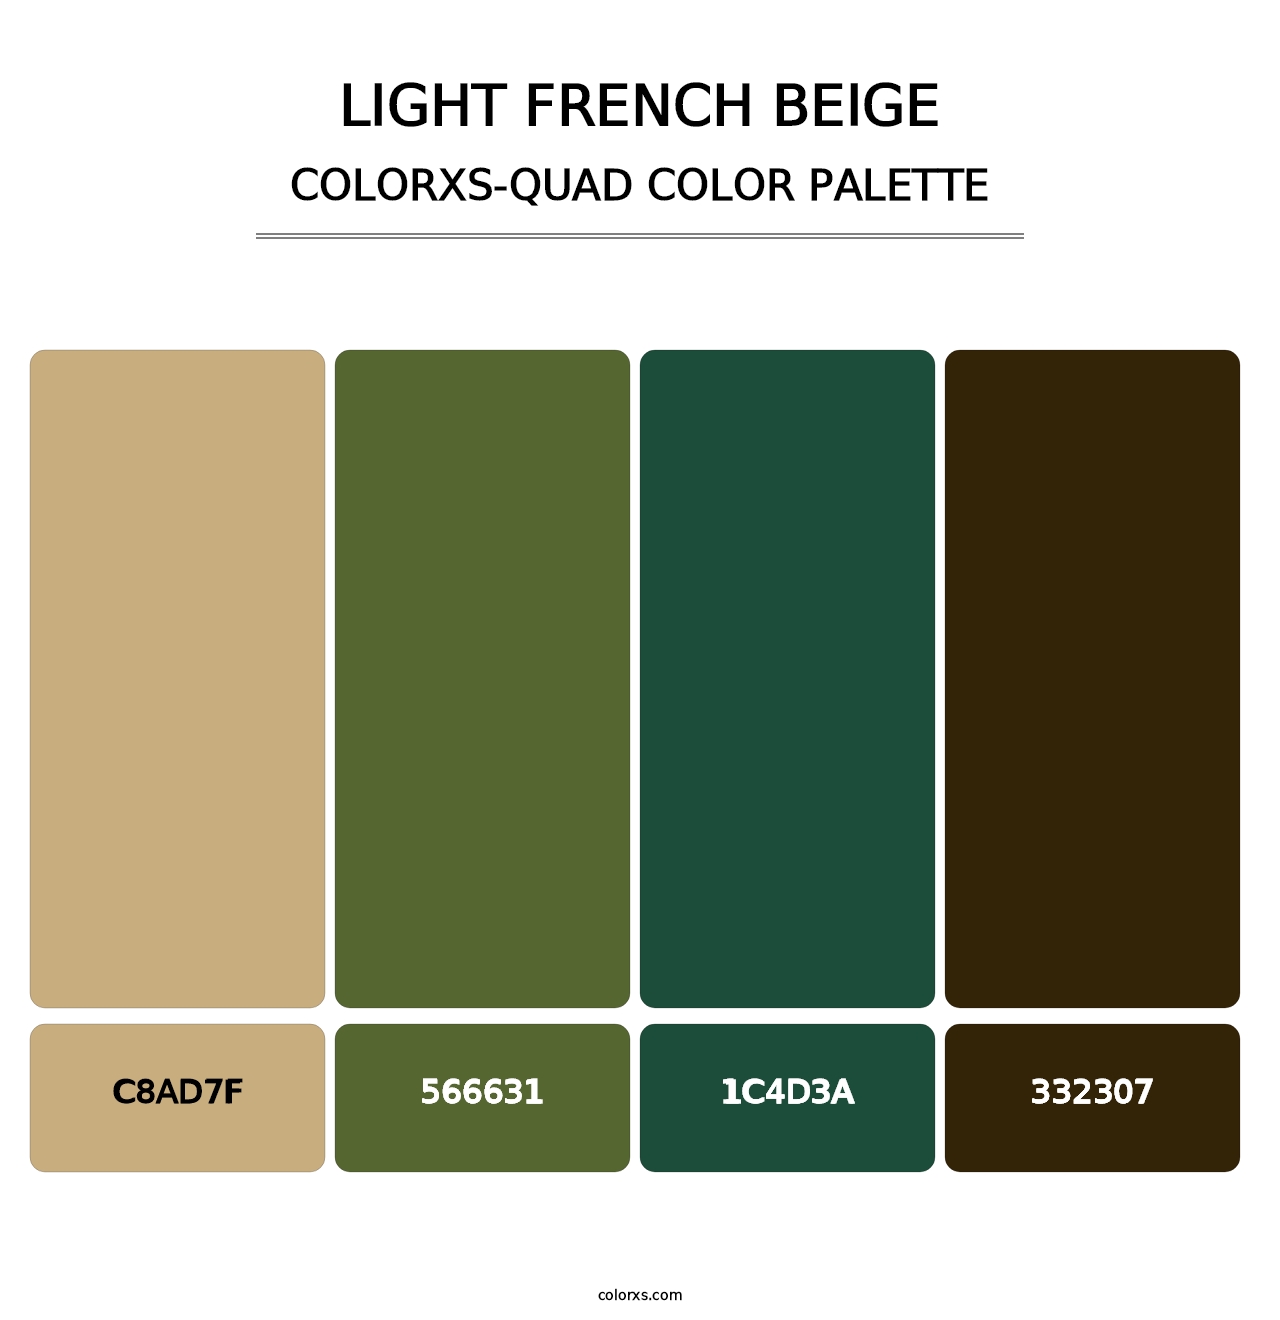 Light French Beige - Colorxs Quad Palette